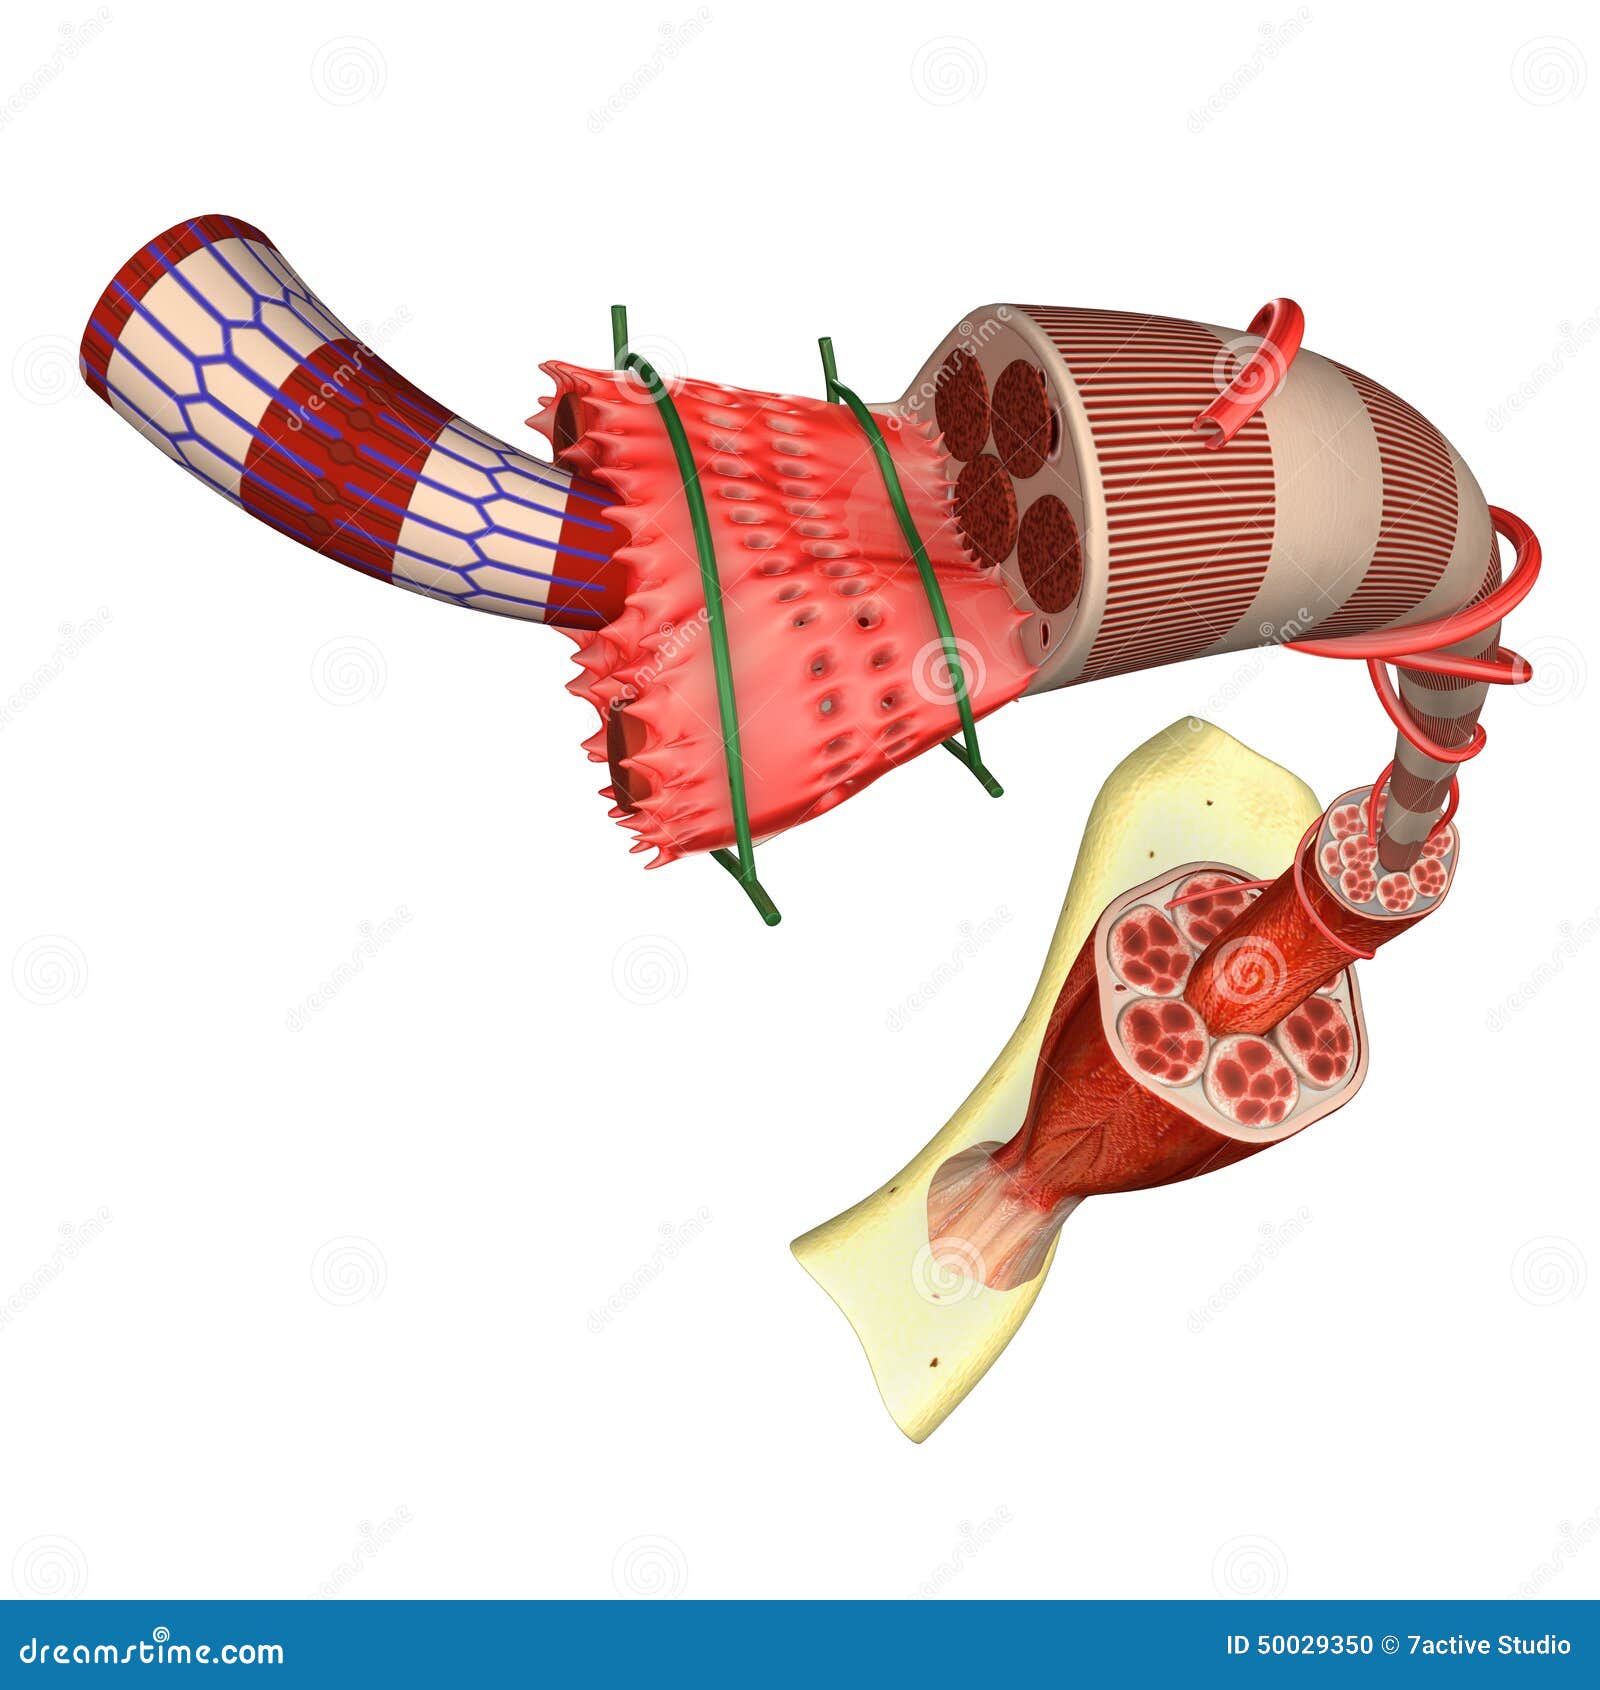 Muscle tissue stock illustration. Illustration of health - 50029350